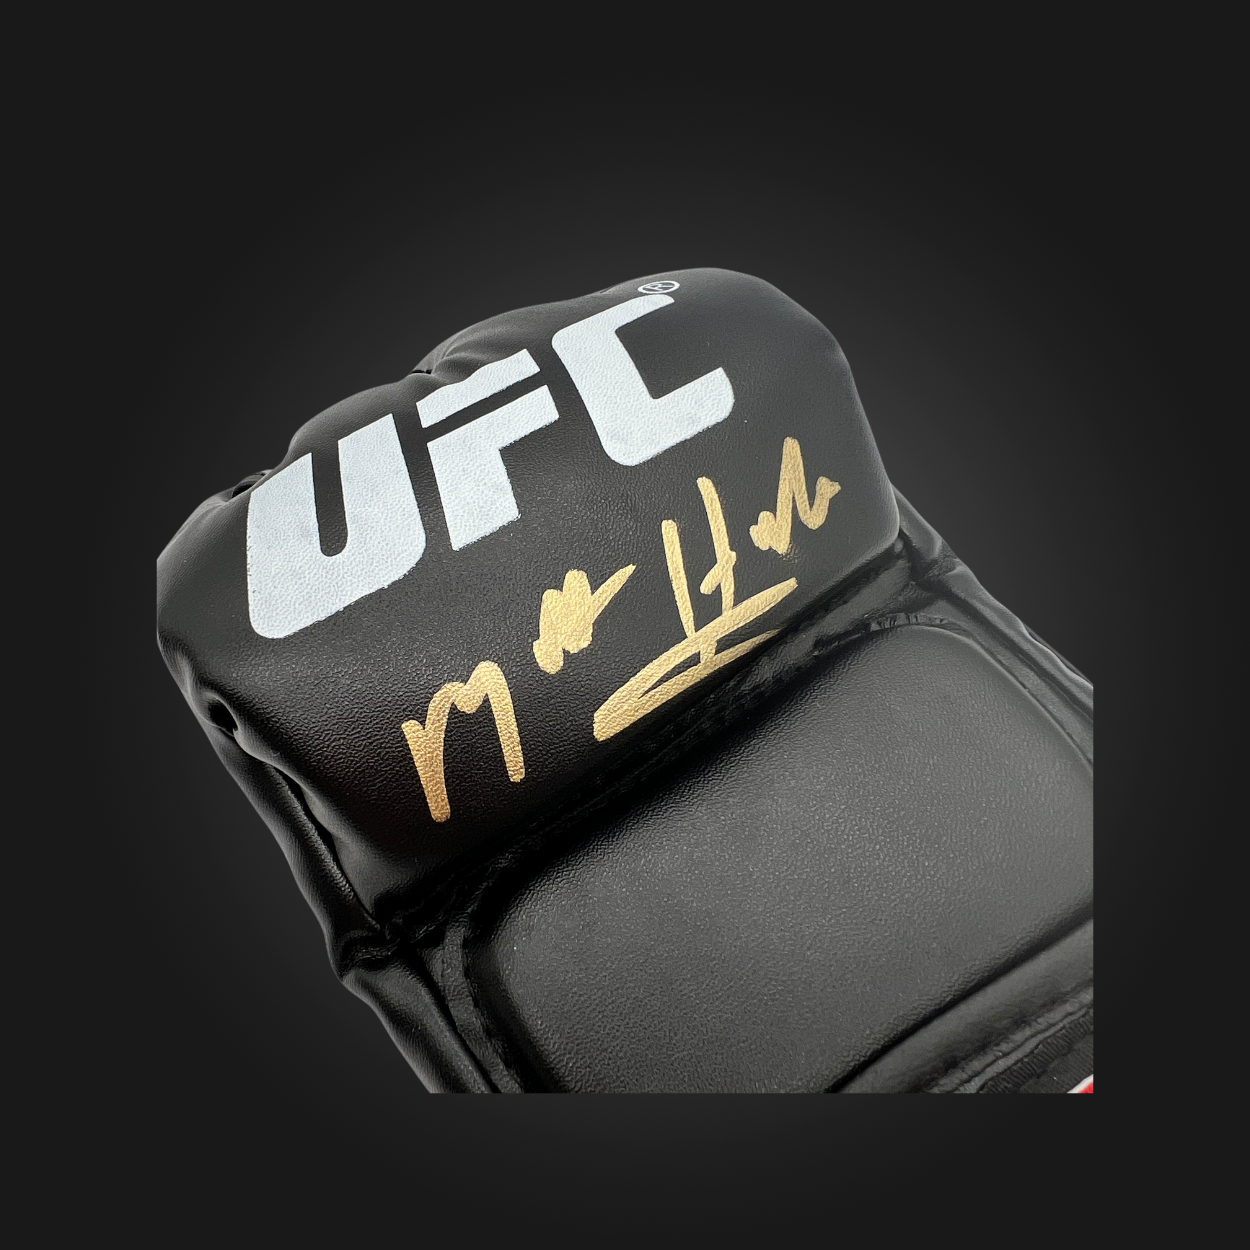 Matt Hughes Autographed MMA Glove (JSA Certified Authentic)